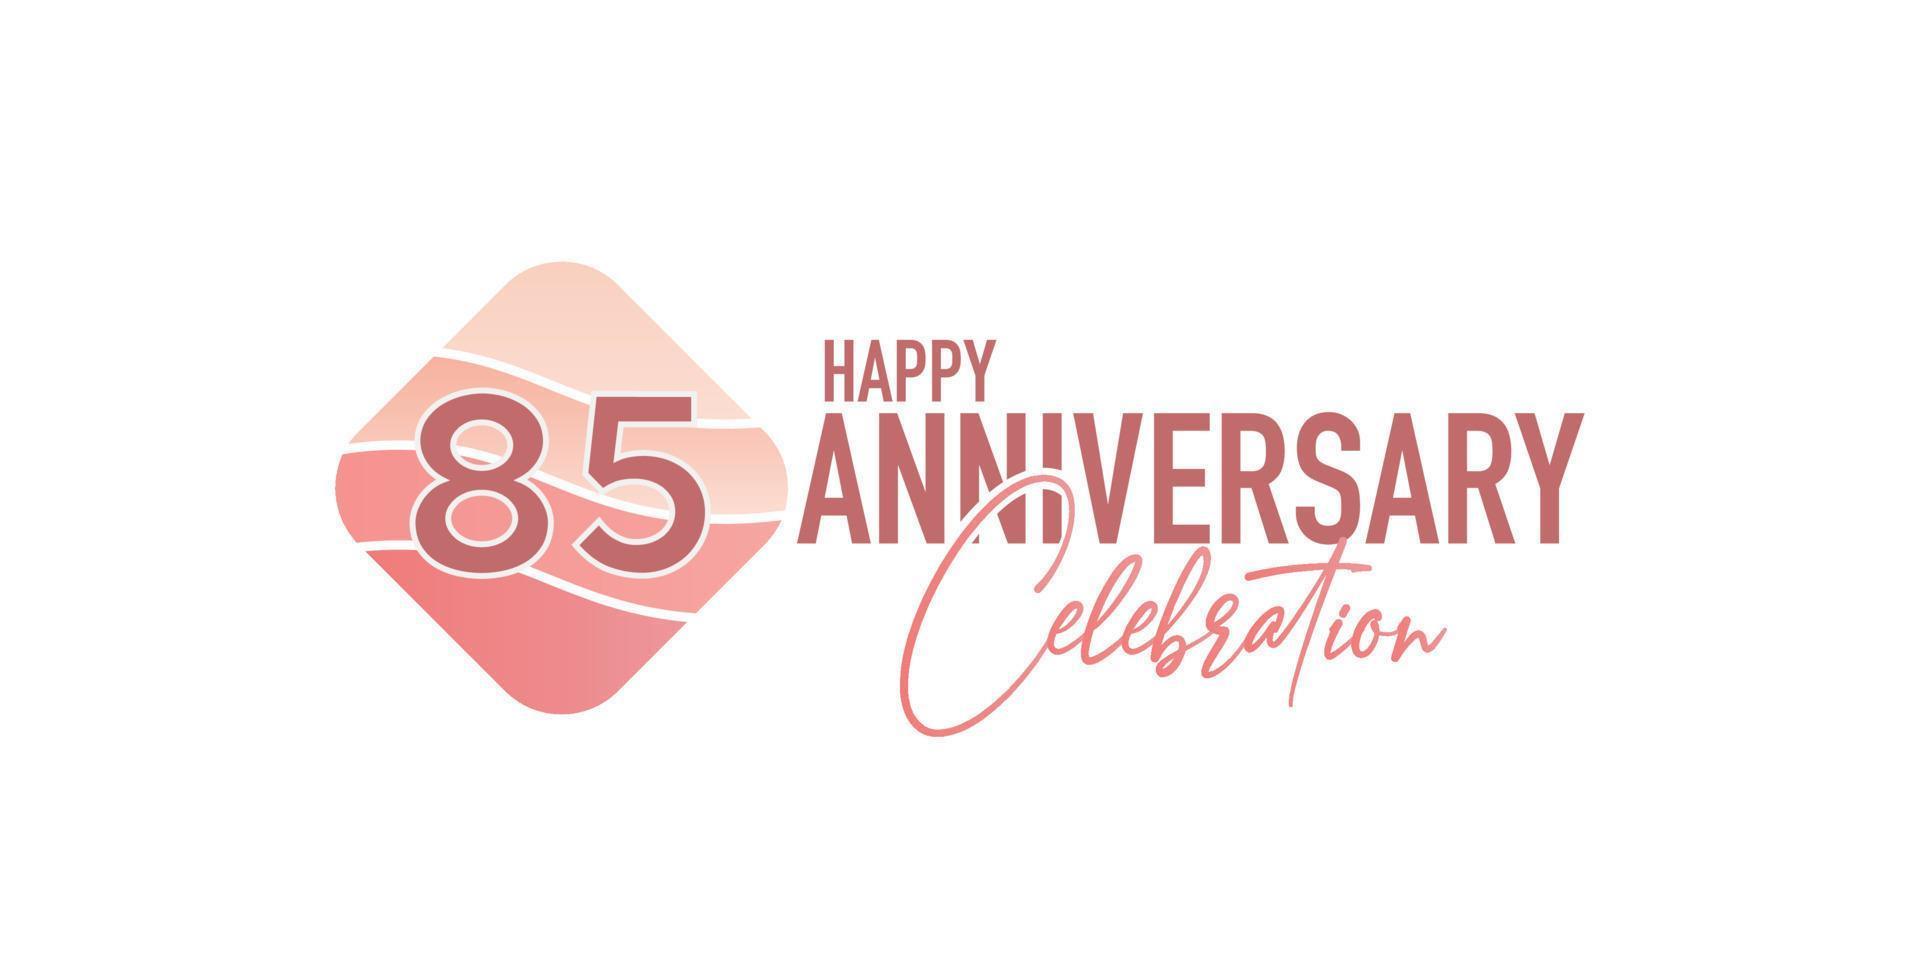 85 years anniversary logo vector illustration design celebration with pink geometric design